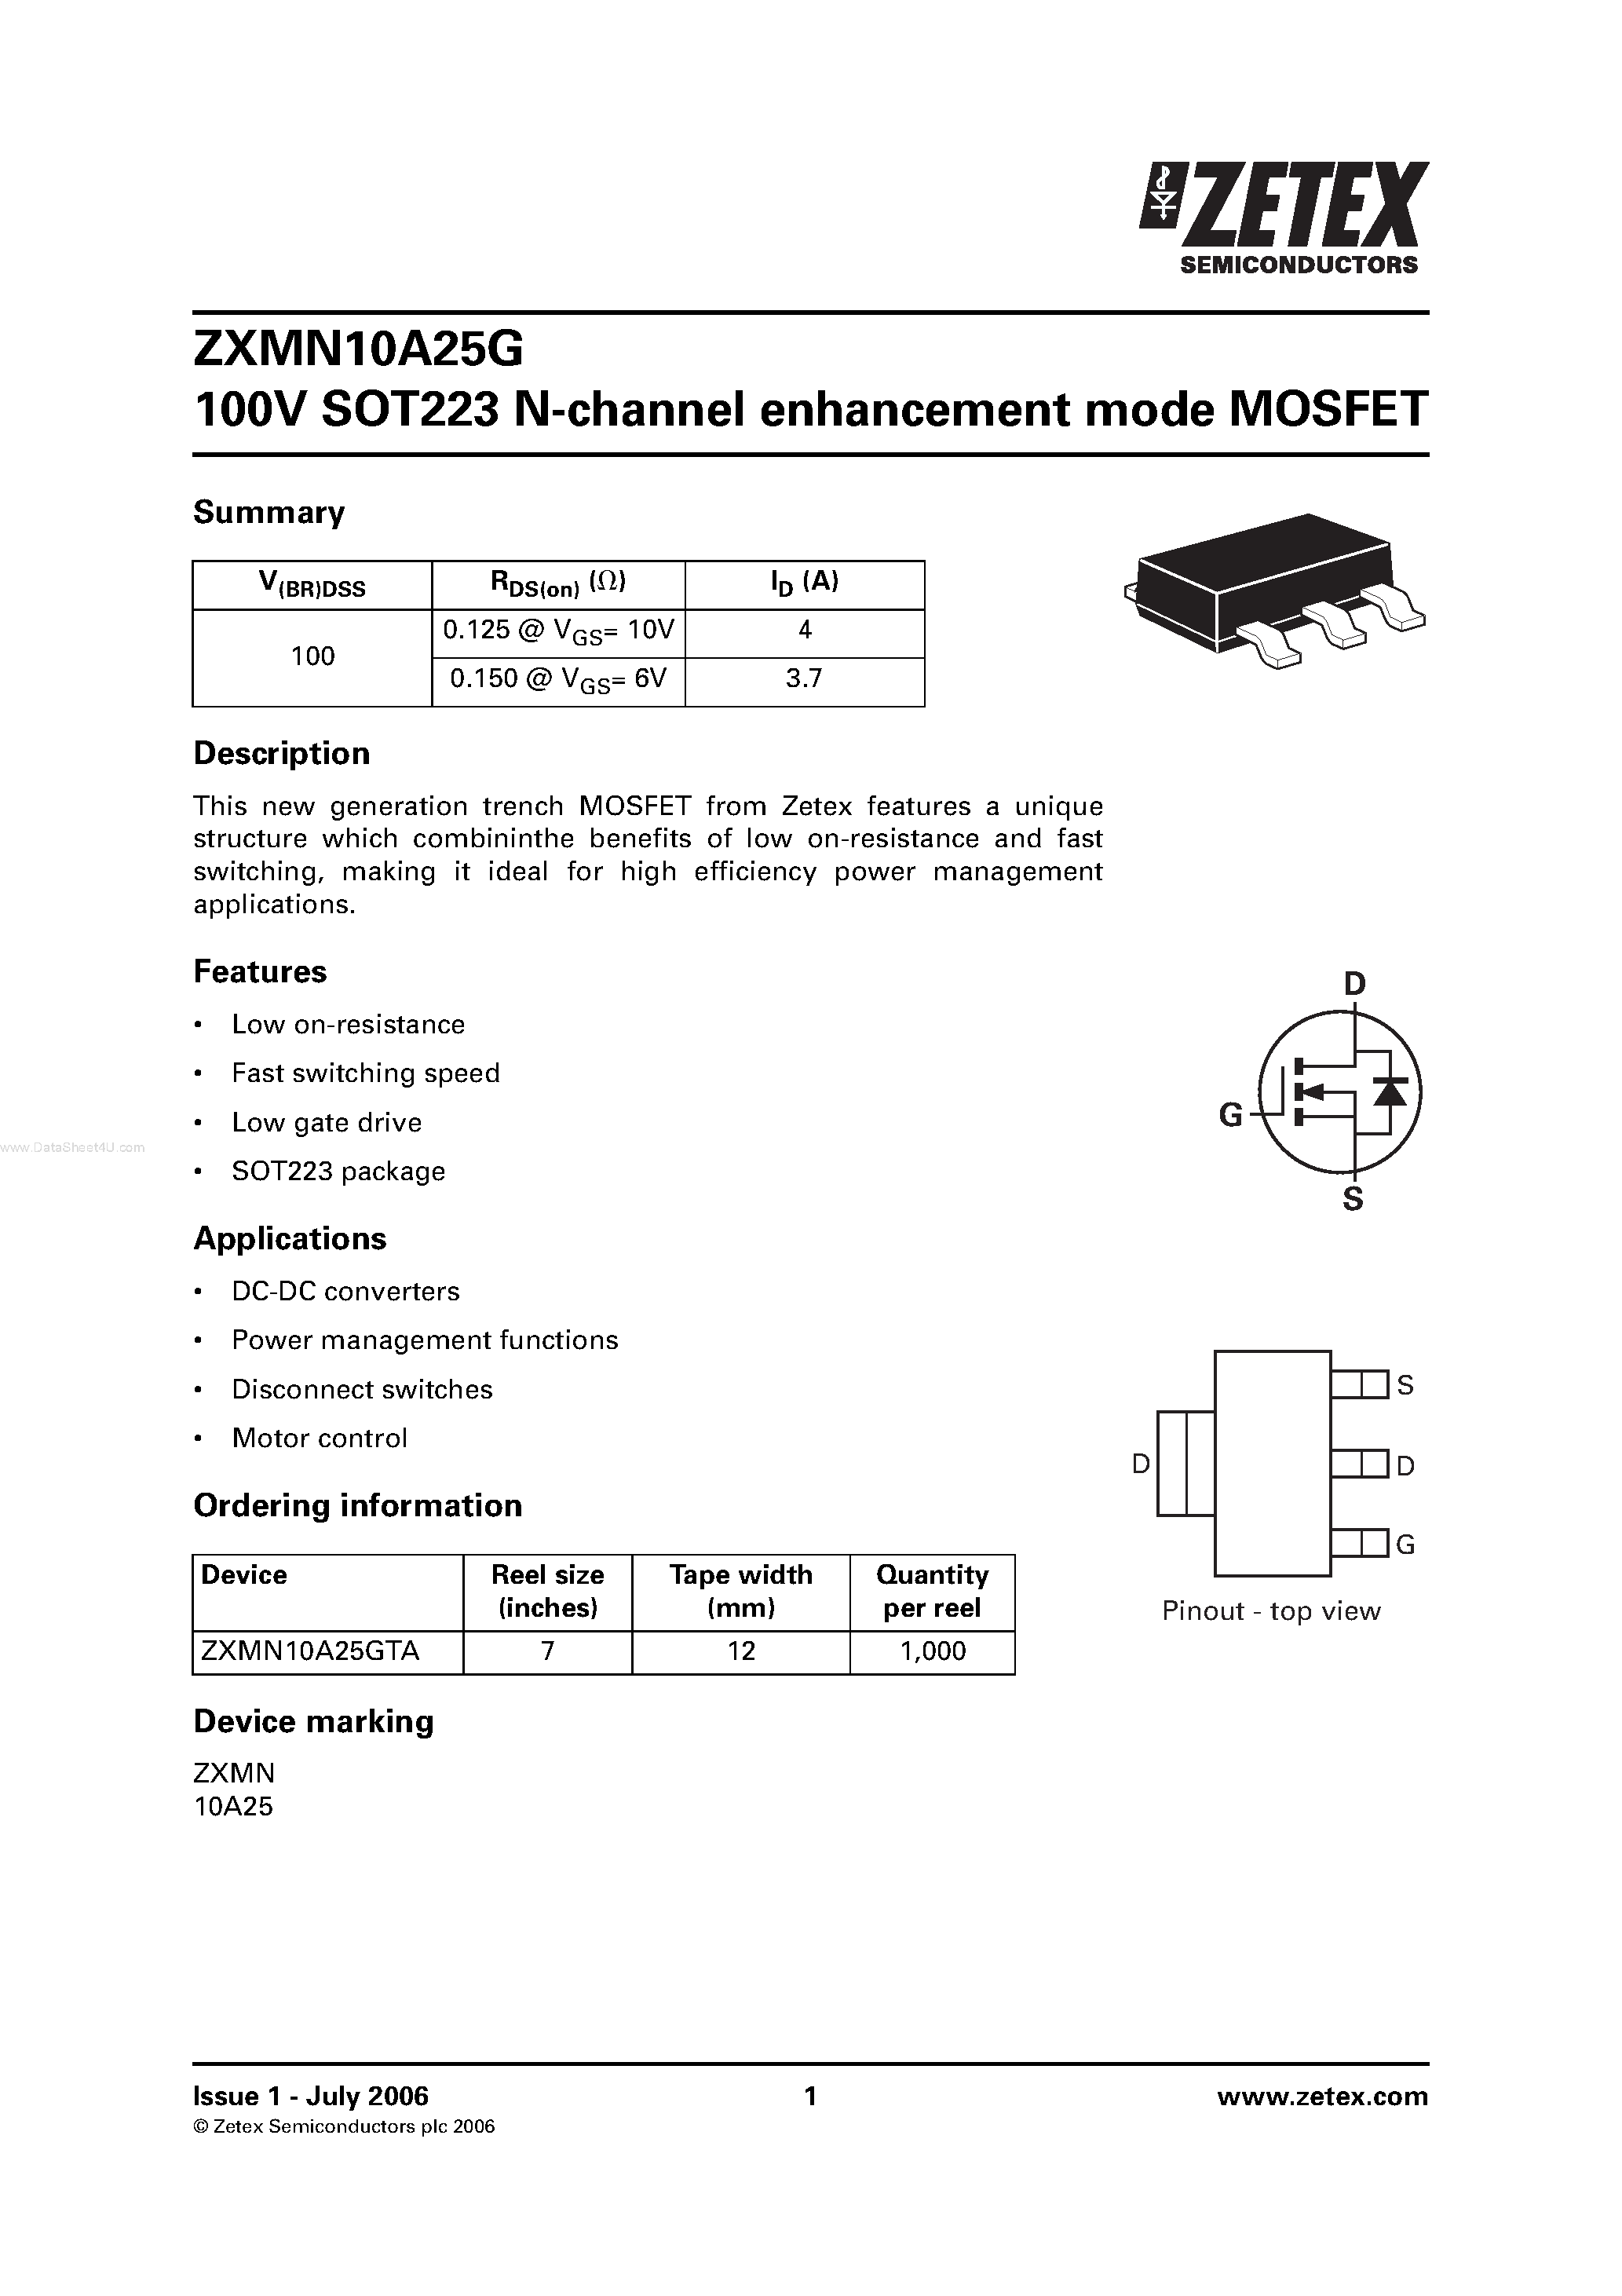 Datasheet ZXMN10A25G - 100V SOT223 N-channel enhancement mode MOSFET page 1